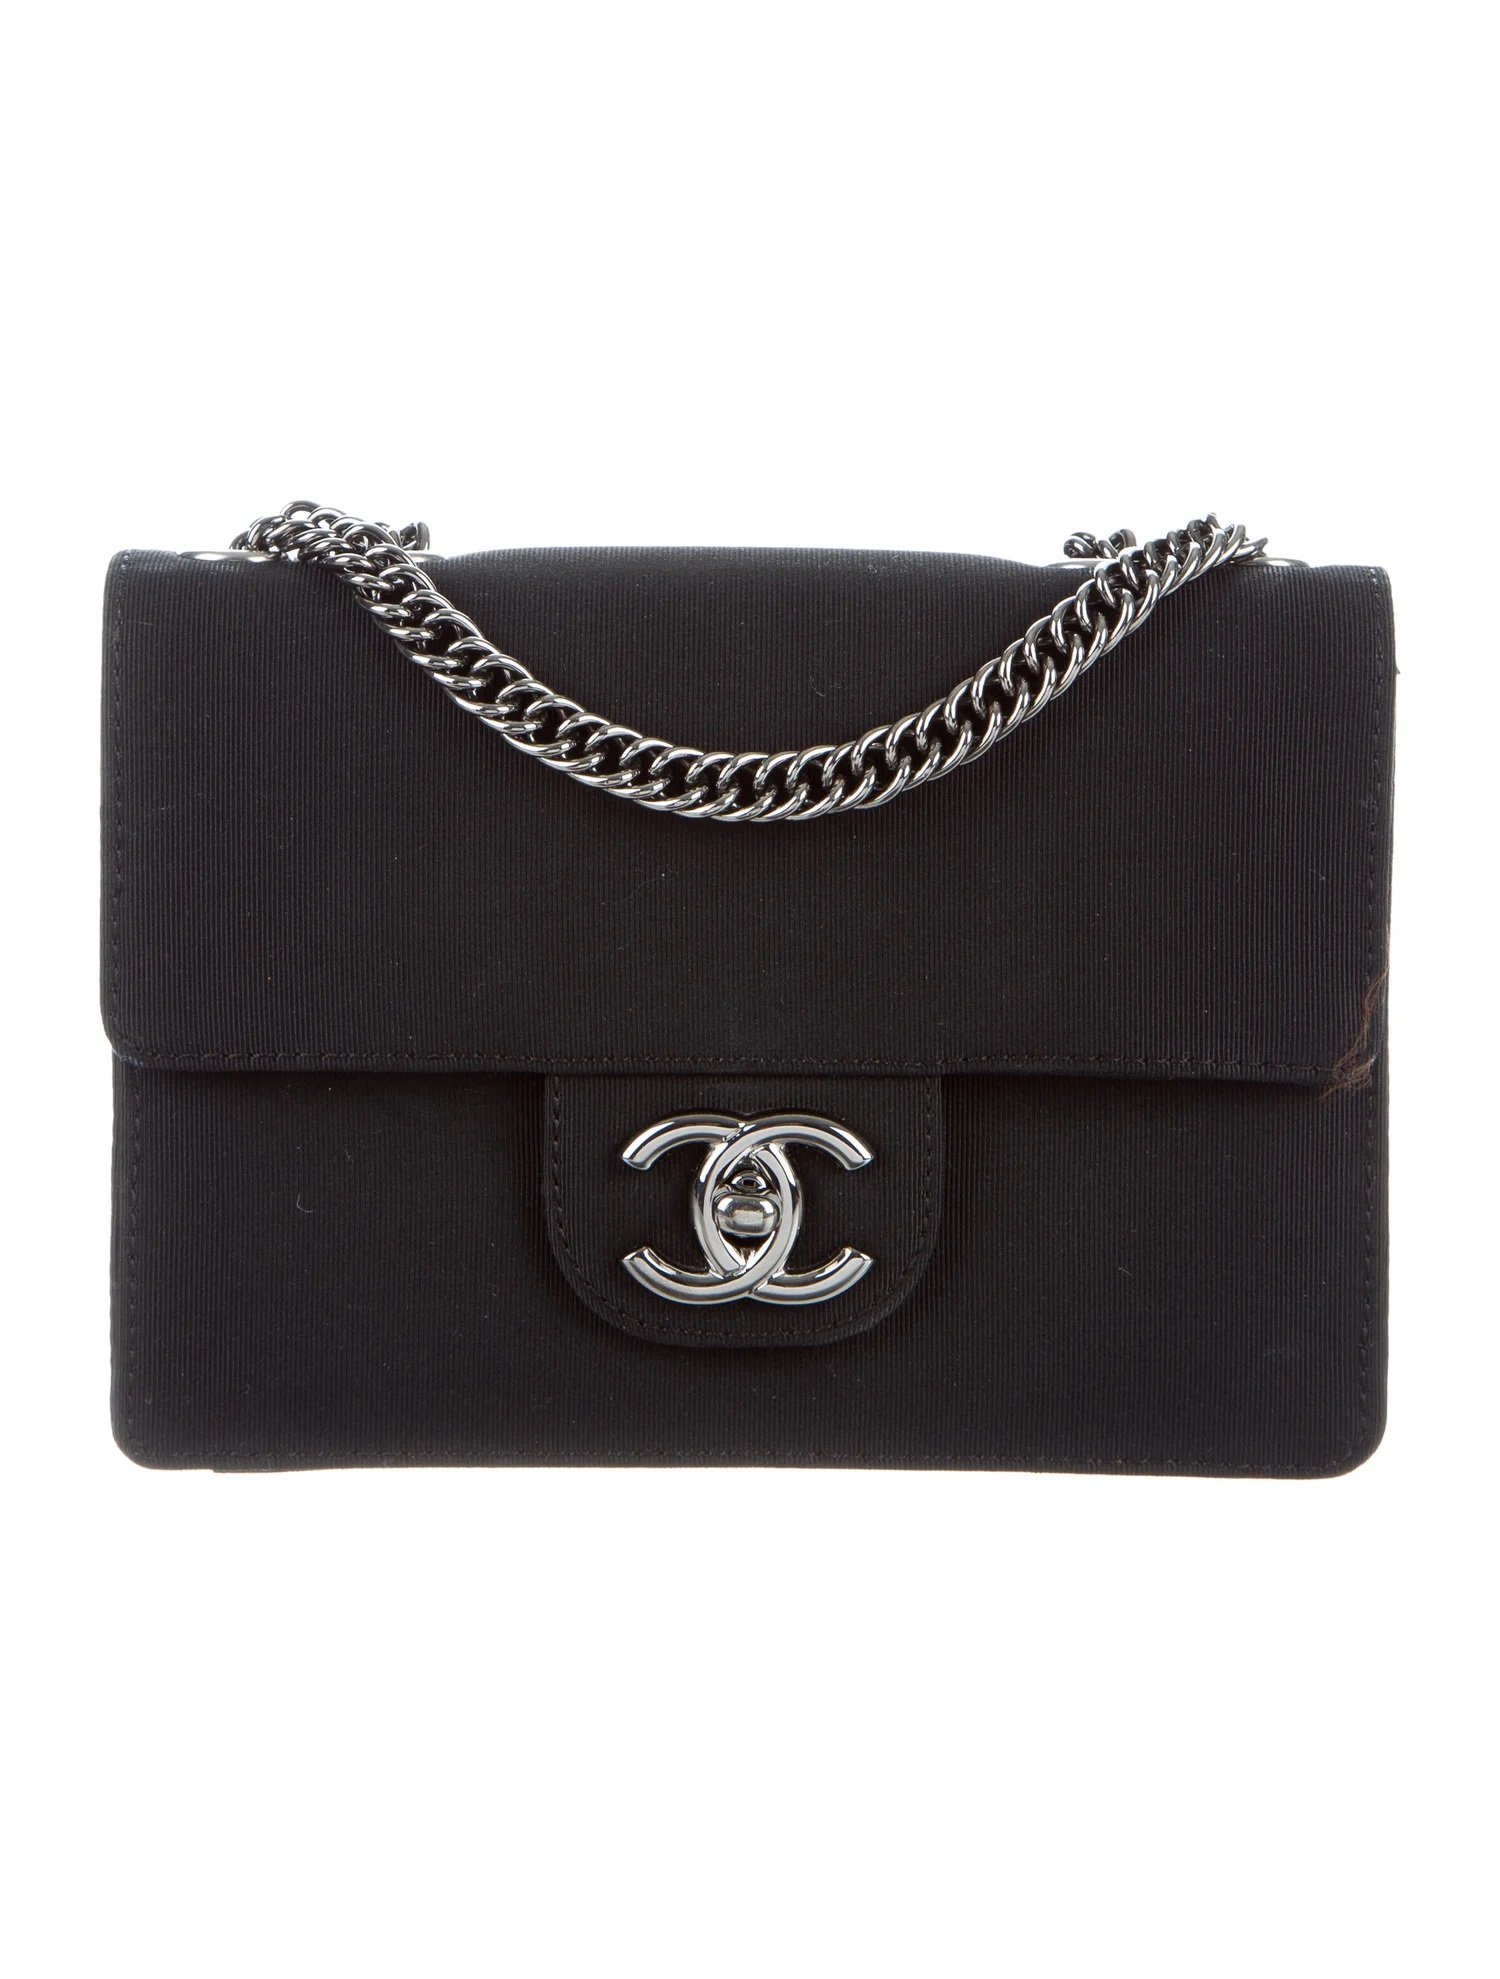 Chanel Grosgrain Mini Flap Bag in Black.jpg